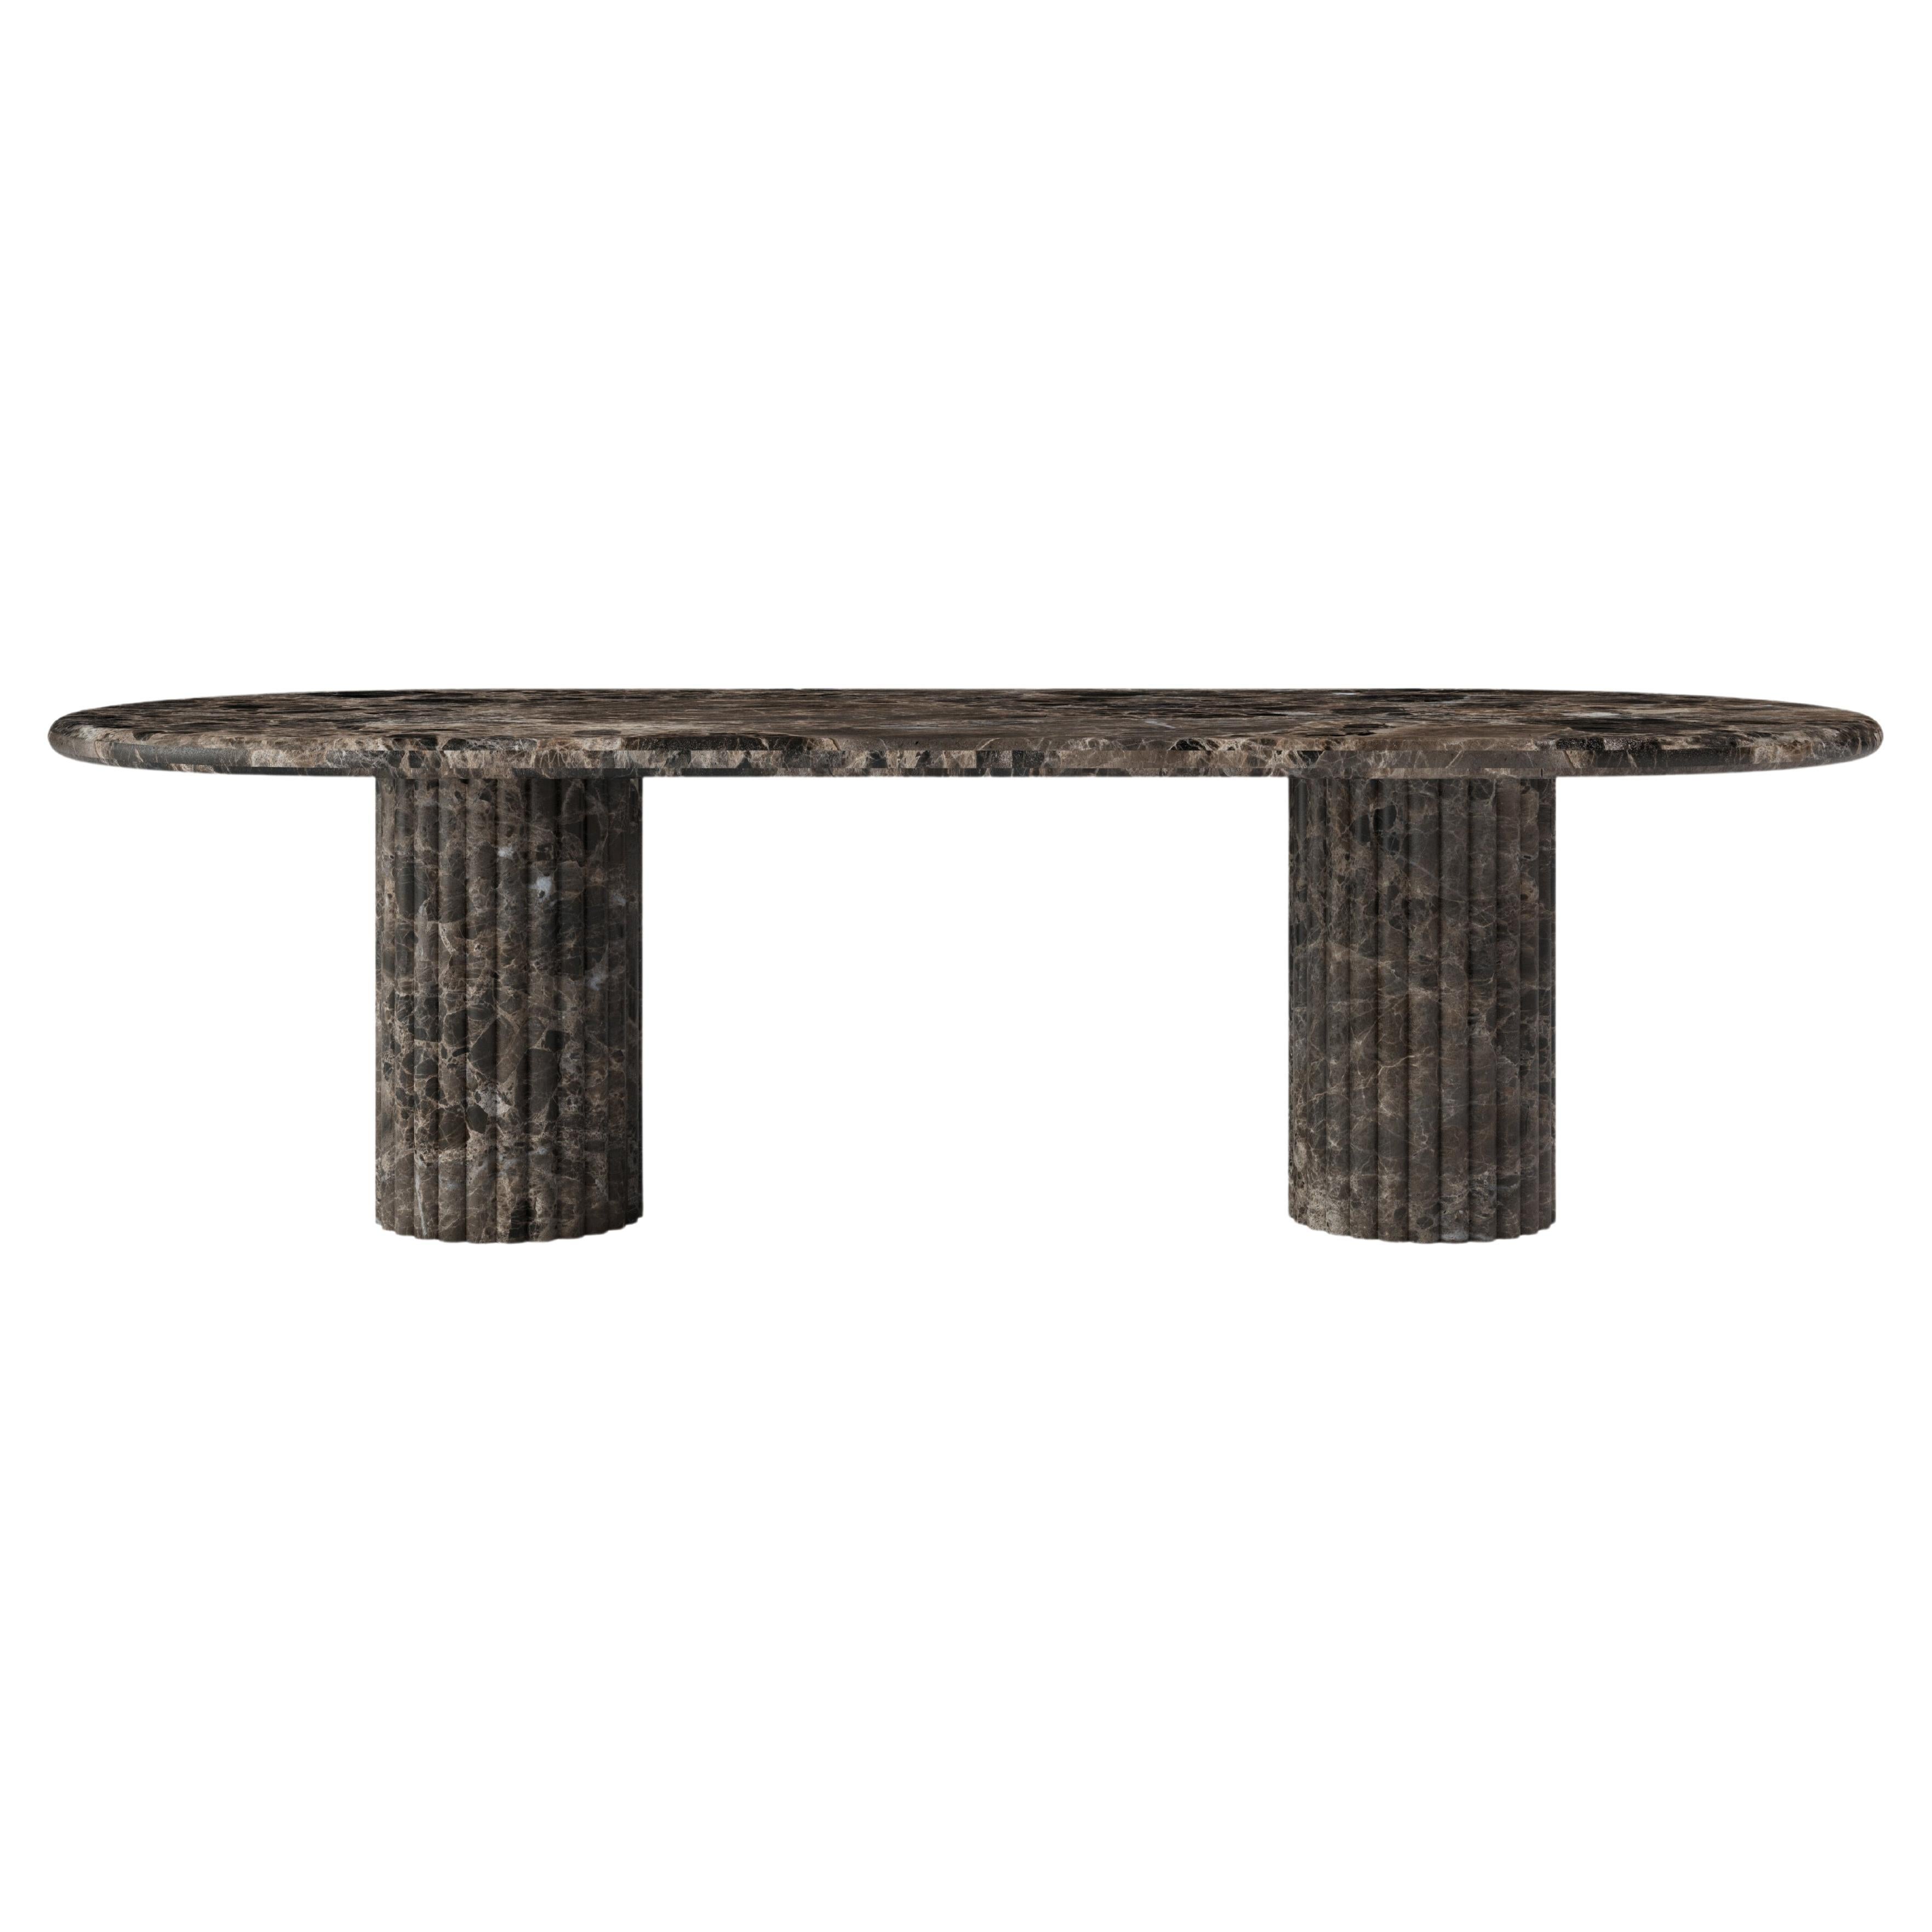 FORM(LA) Fluta Oval Dining Table 118”L x 48”W x 30”H Dark Emperador Marble